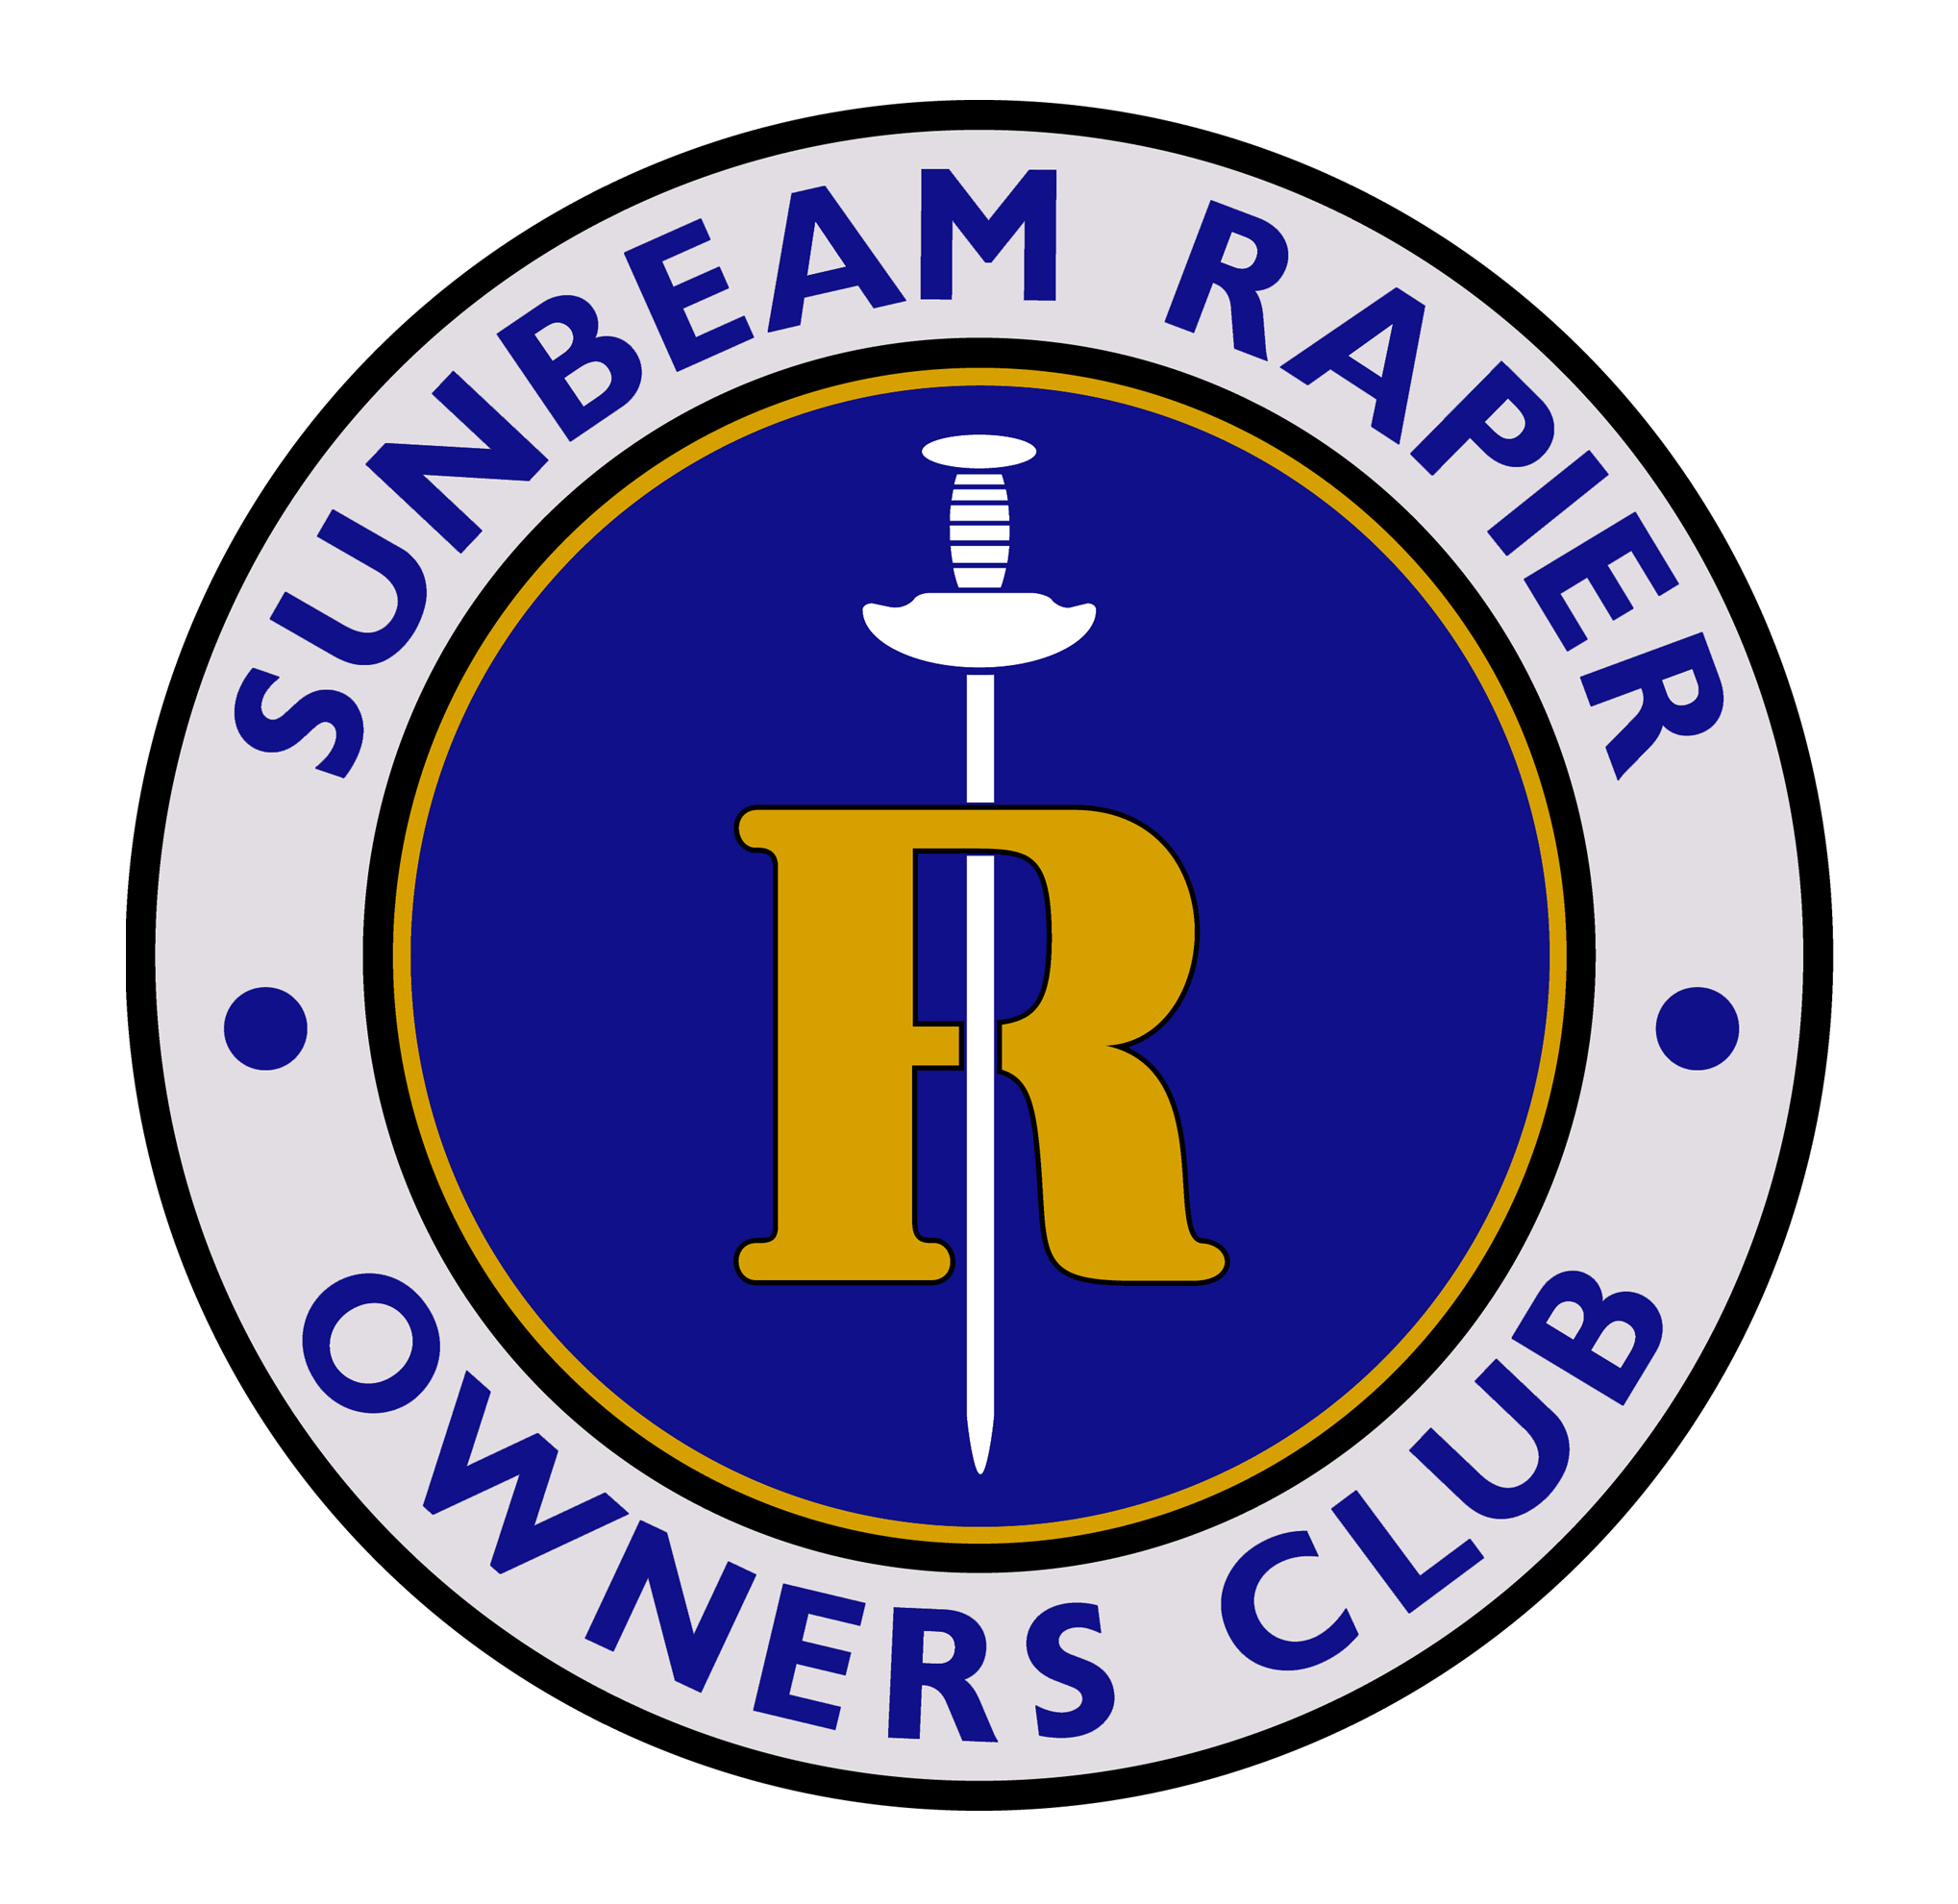 Sunbeam Rapier Owners Club Evoke Classics Owners Club listings